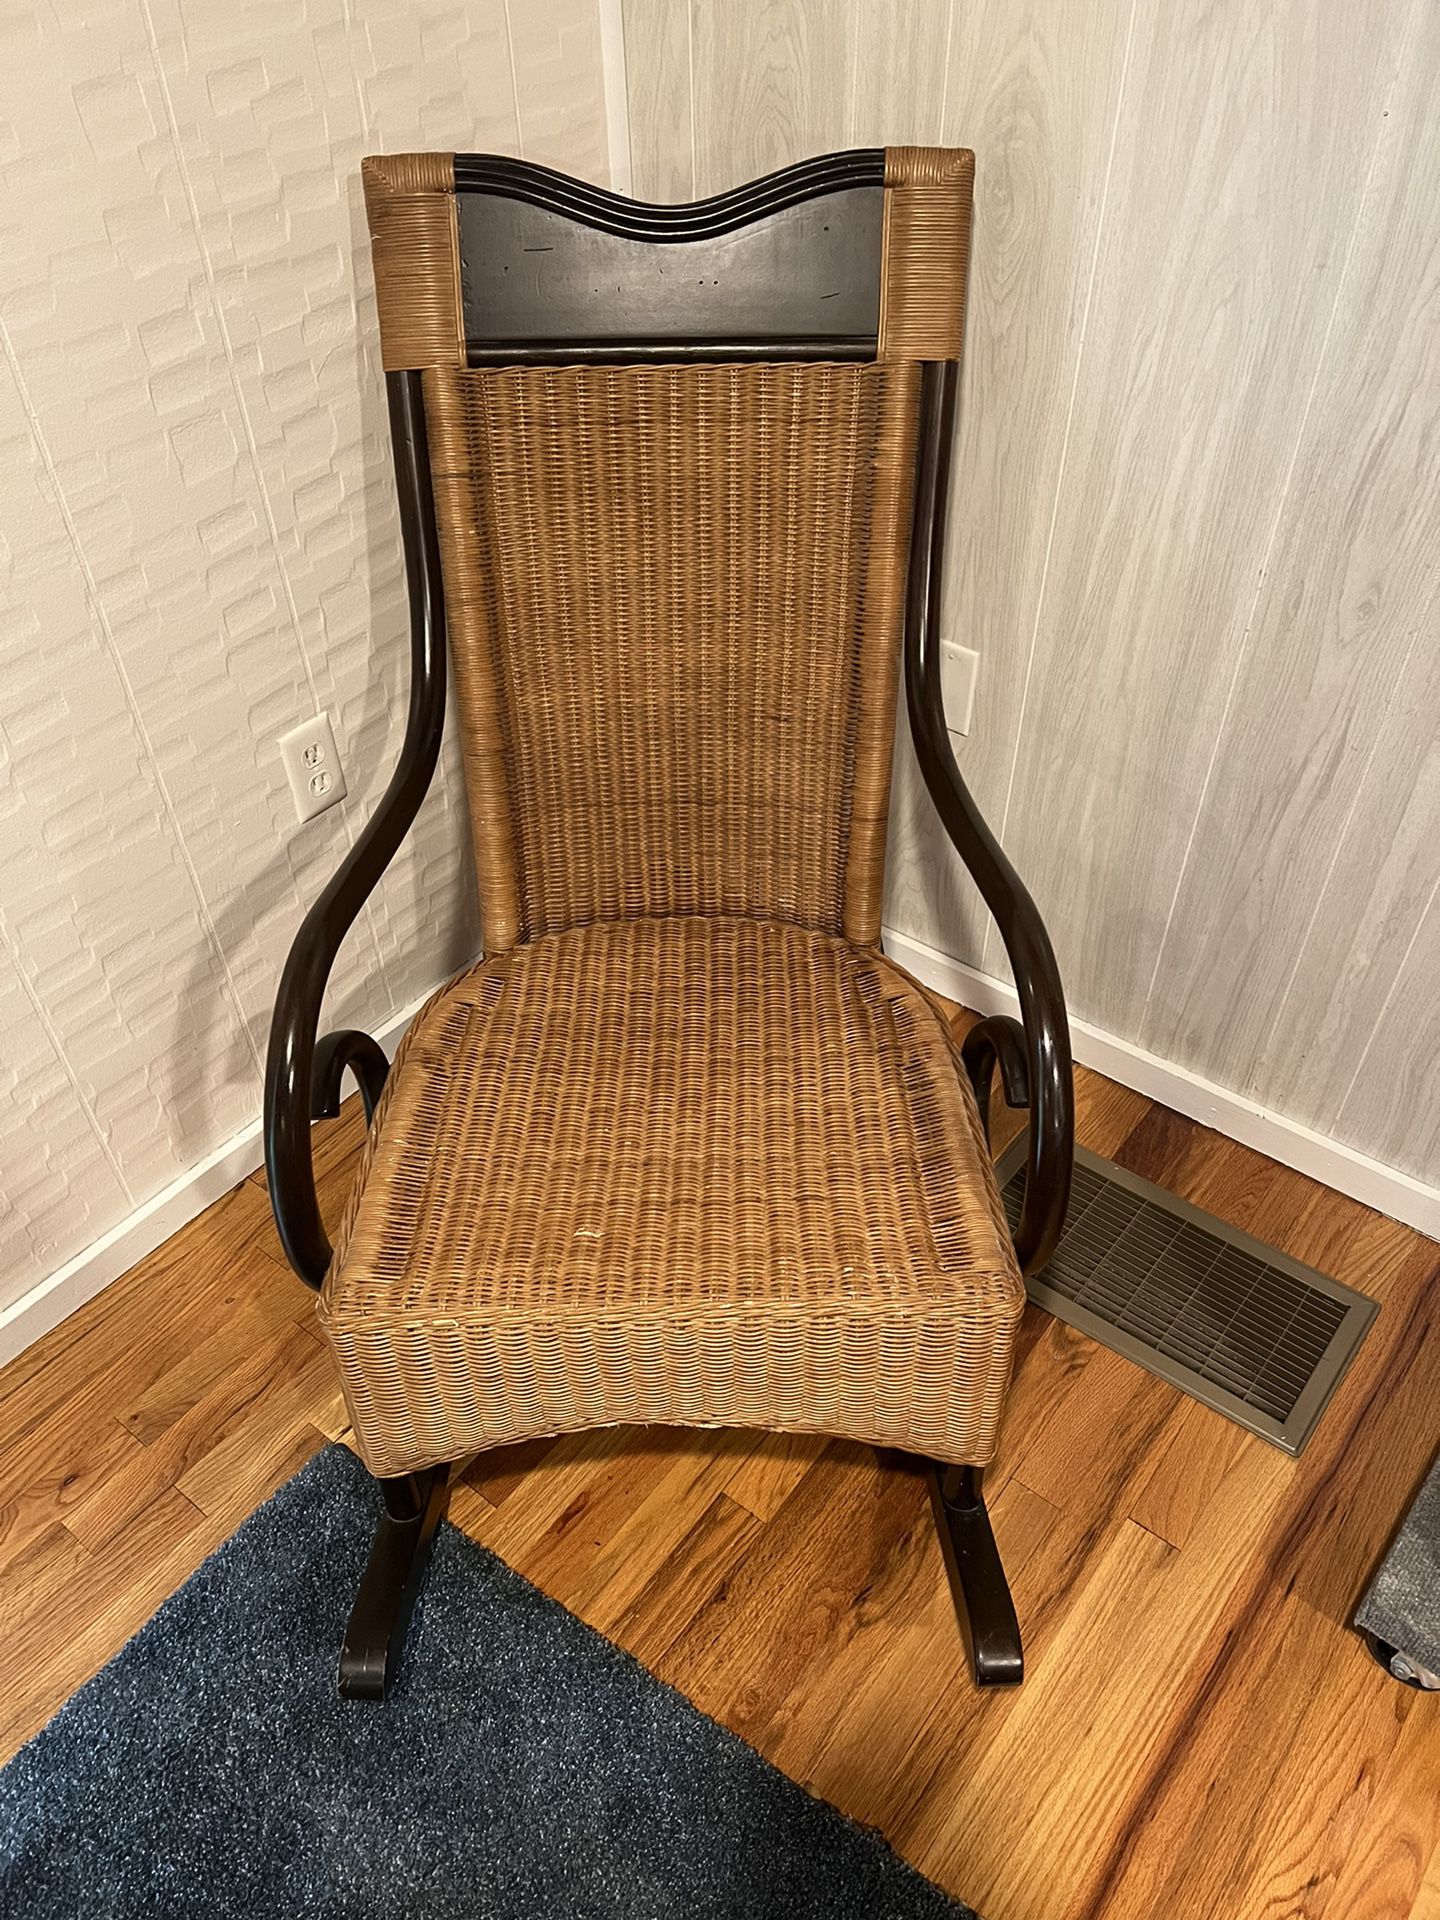 Wicker Rocking Chair 